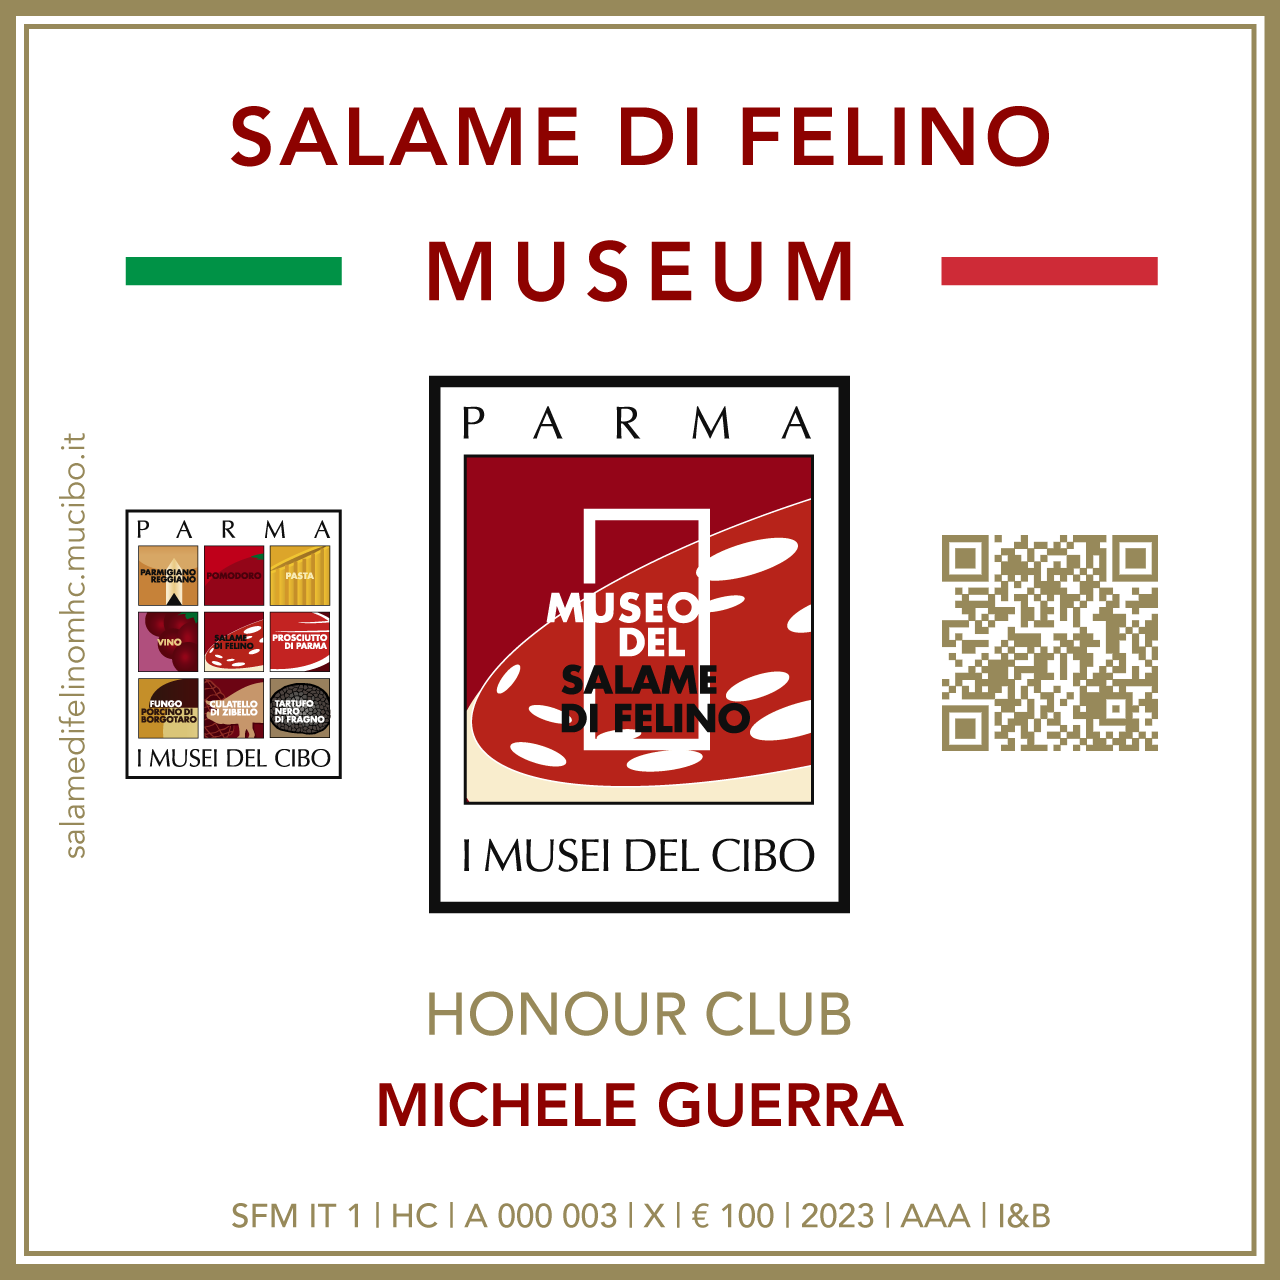 Salame di Felino Museum Honour Club - Token Id A 000 003 - MICHELE GUERRA